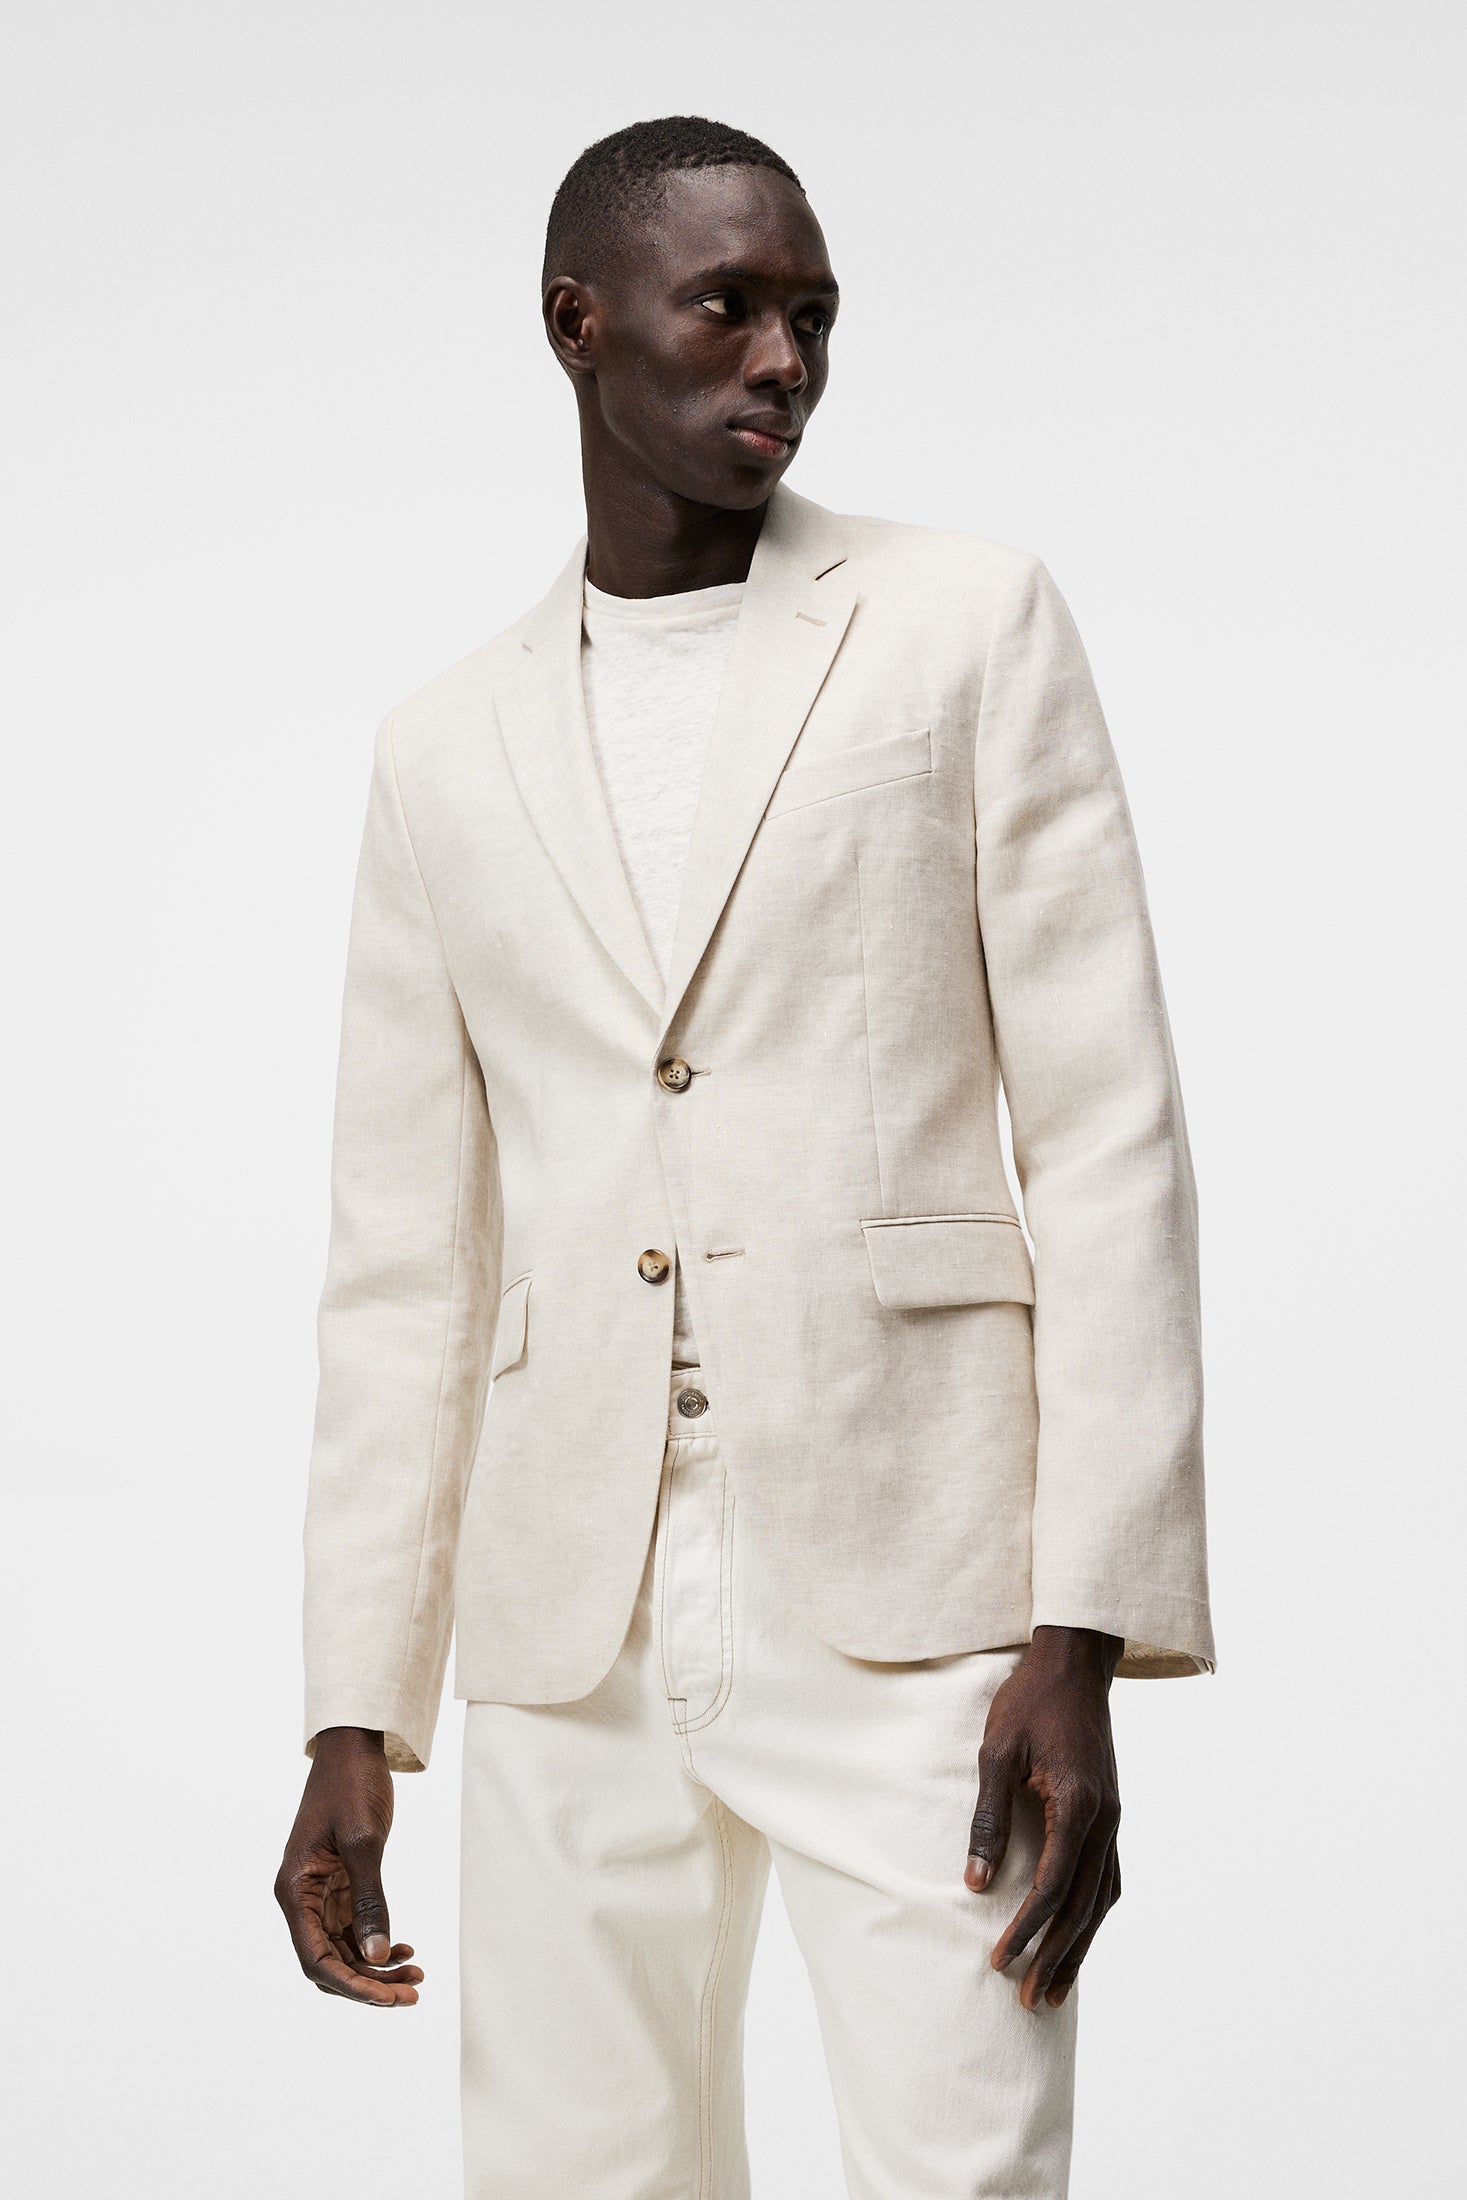 H&M Slim Fit Linen Jacket | Southcentre Mall